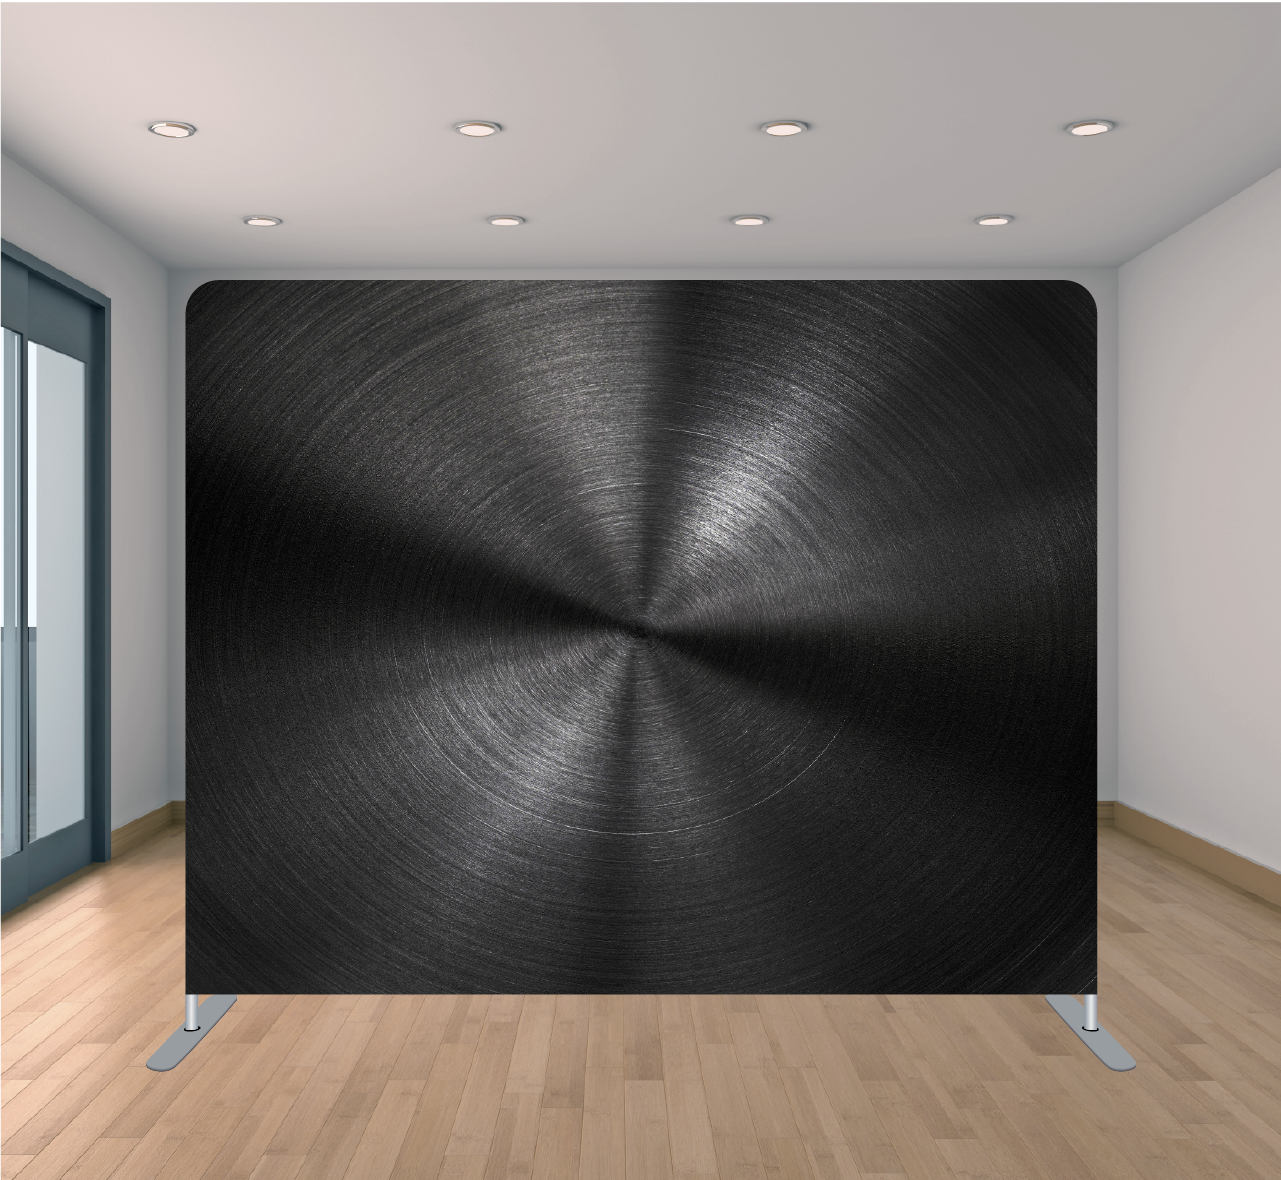 8x8ft Pillowcase Tension Backdrop- Black Ring